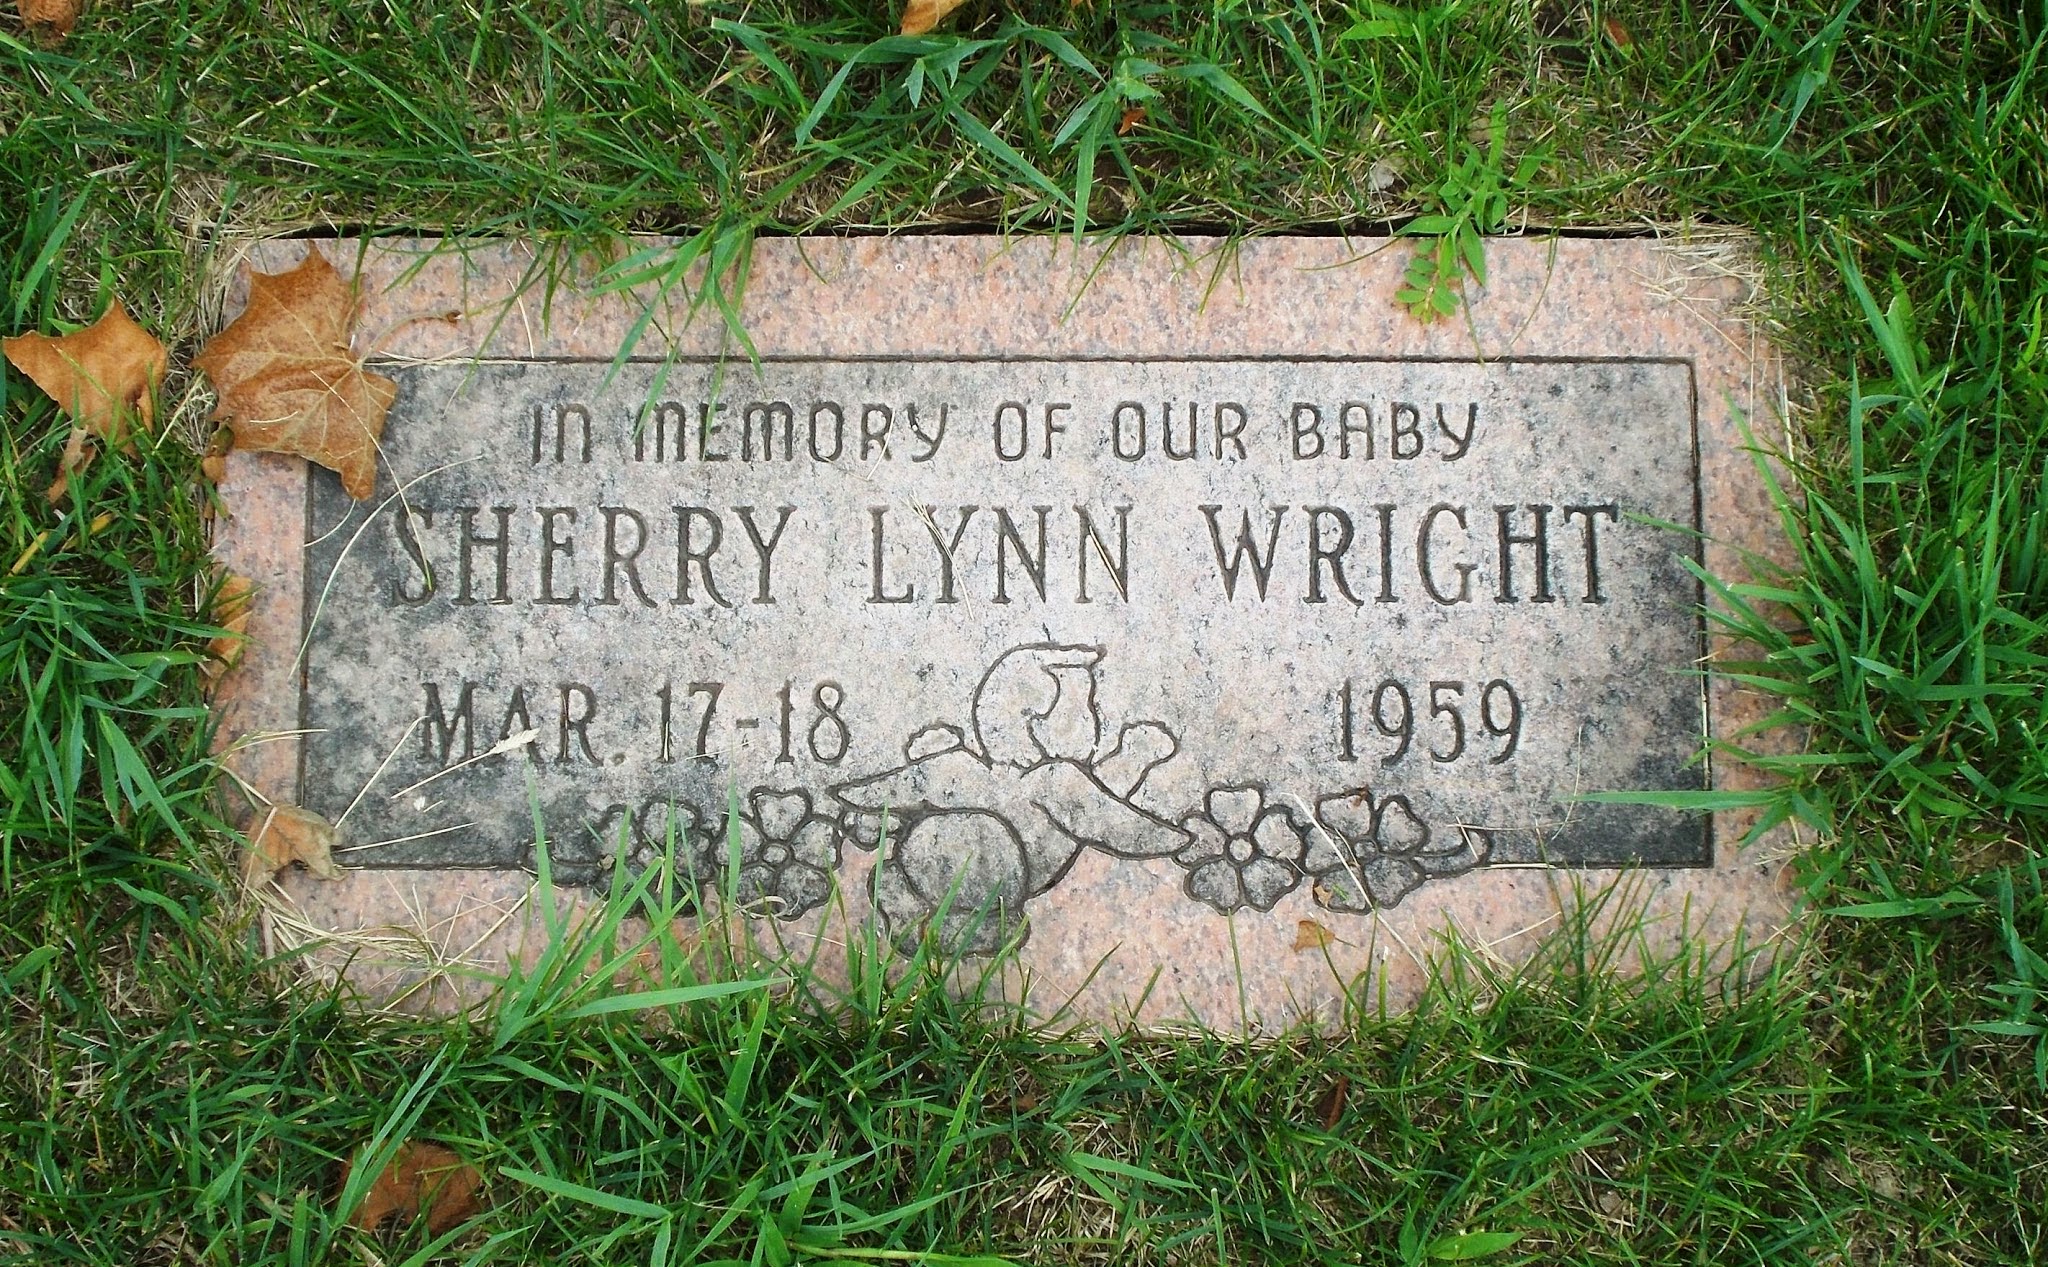 Sherry Lynn Wright